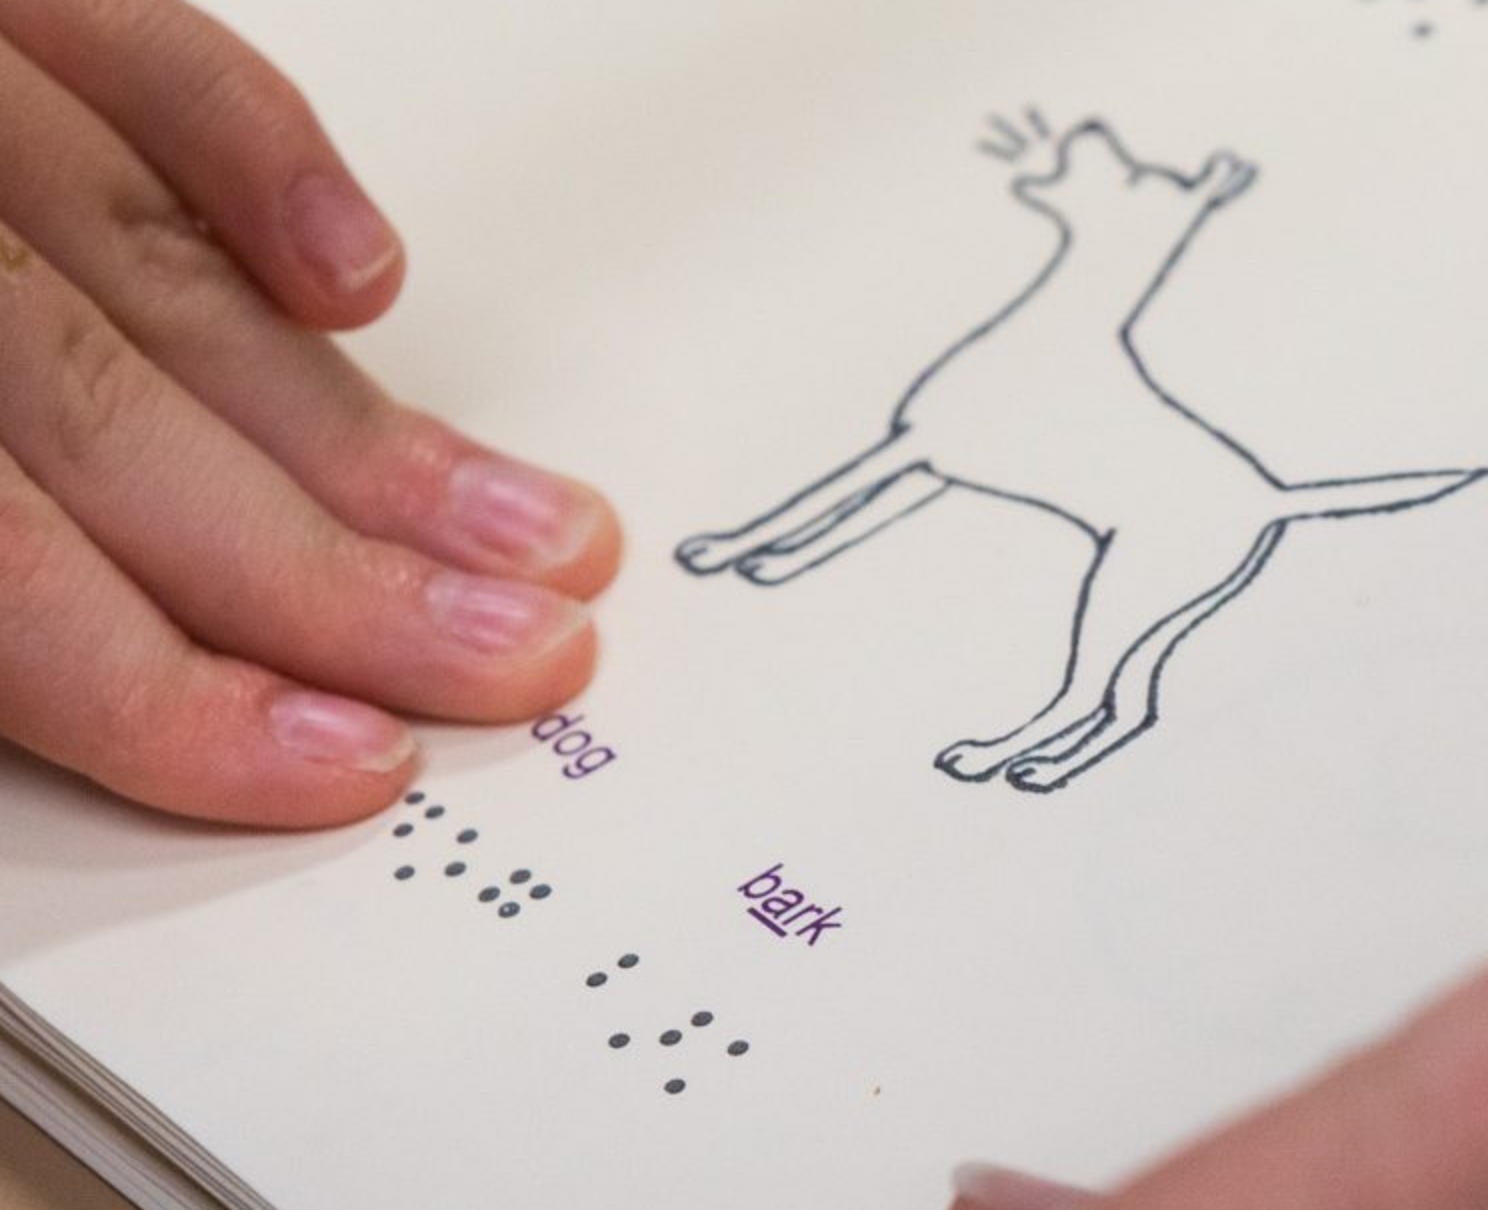 Hand reading braille words "dog bark"